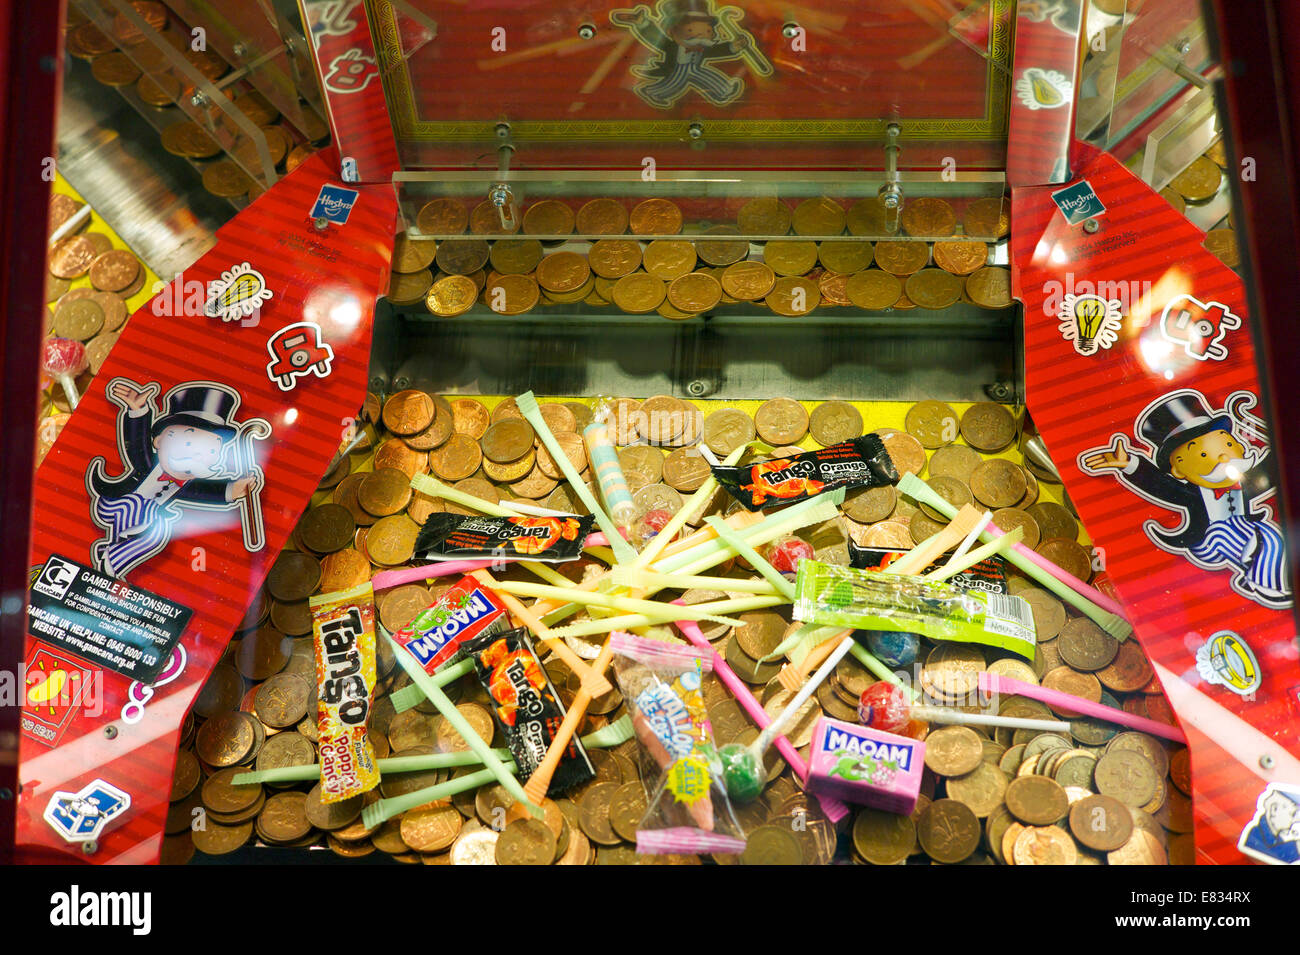 A 'coin pusher' slot machine in an amusement arcade, UK Stock Photo